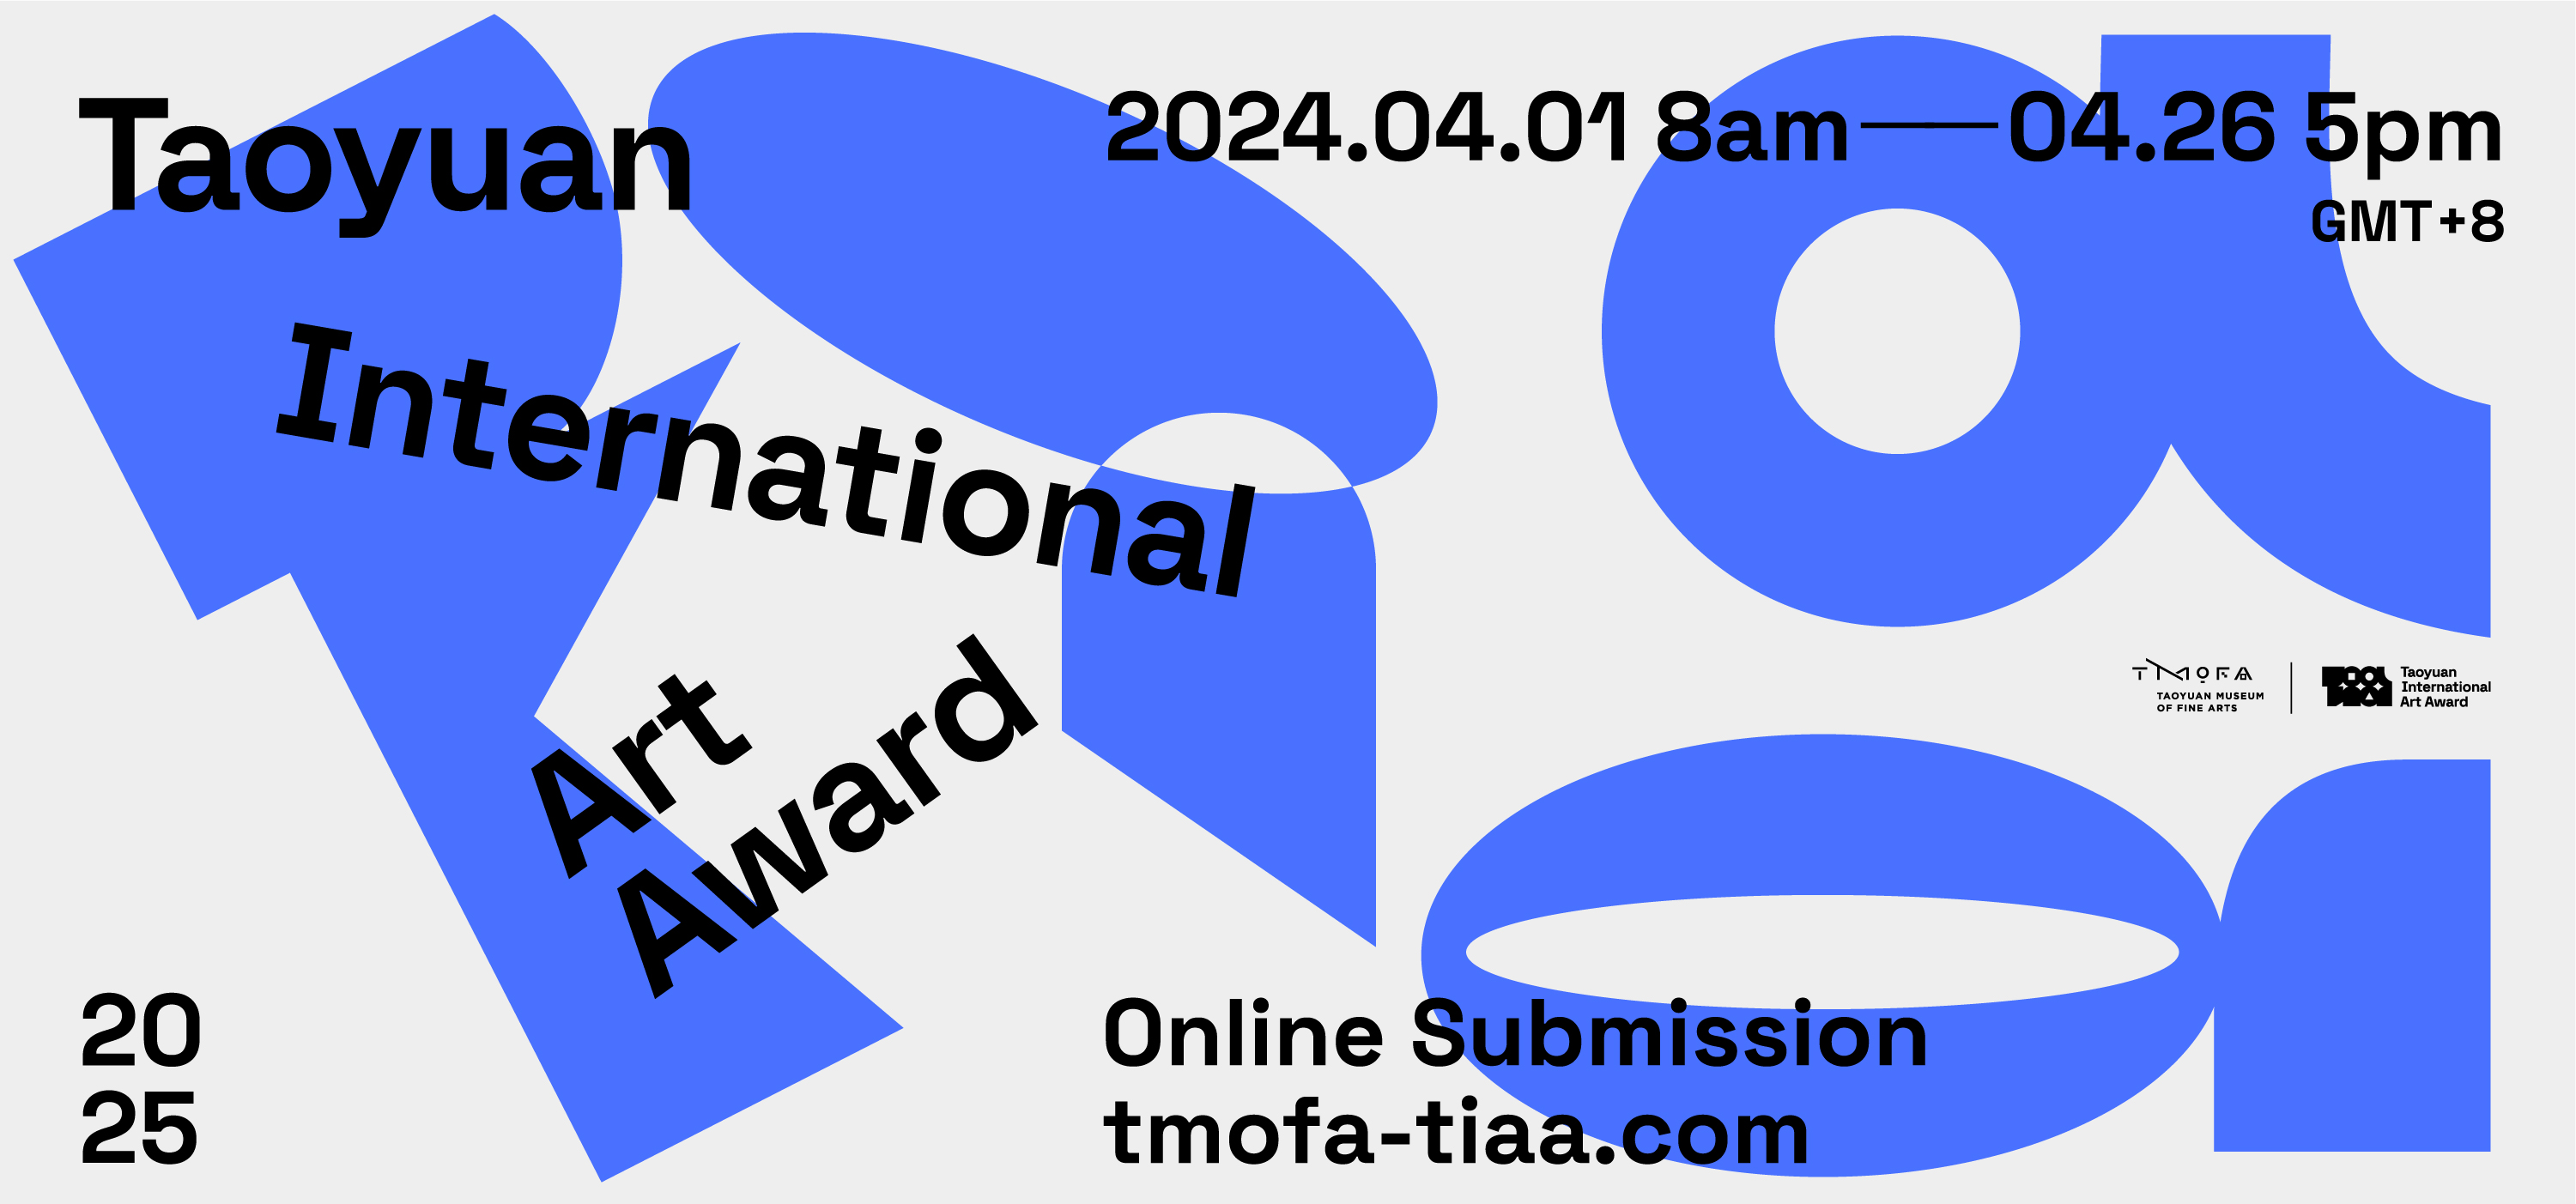 2025 Taoyuan International Art Award Global Call for Entries